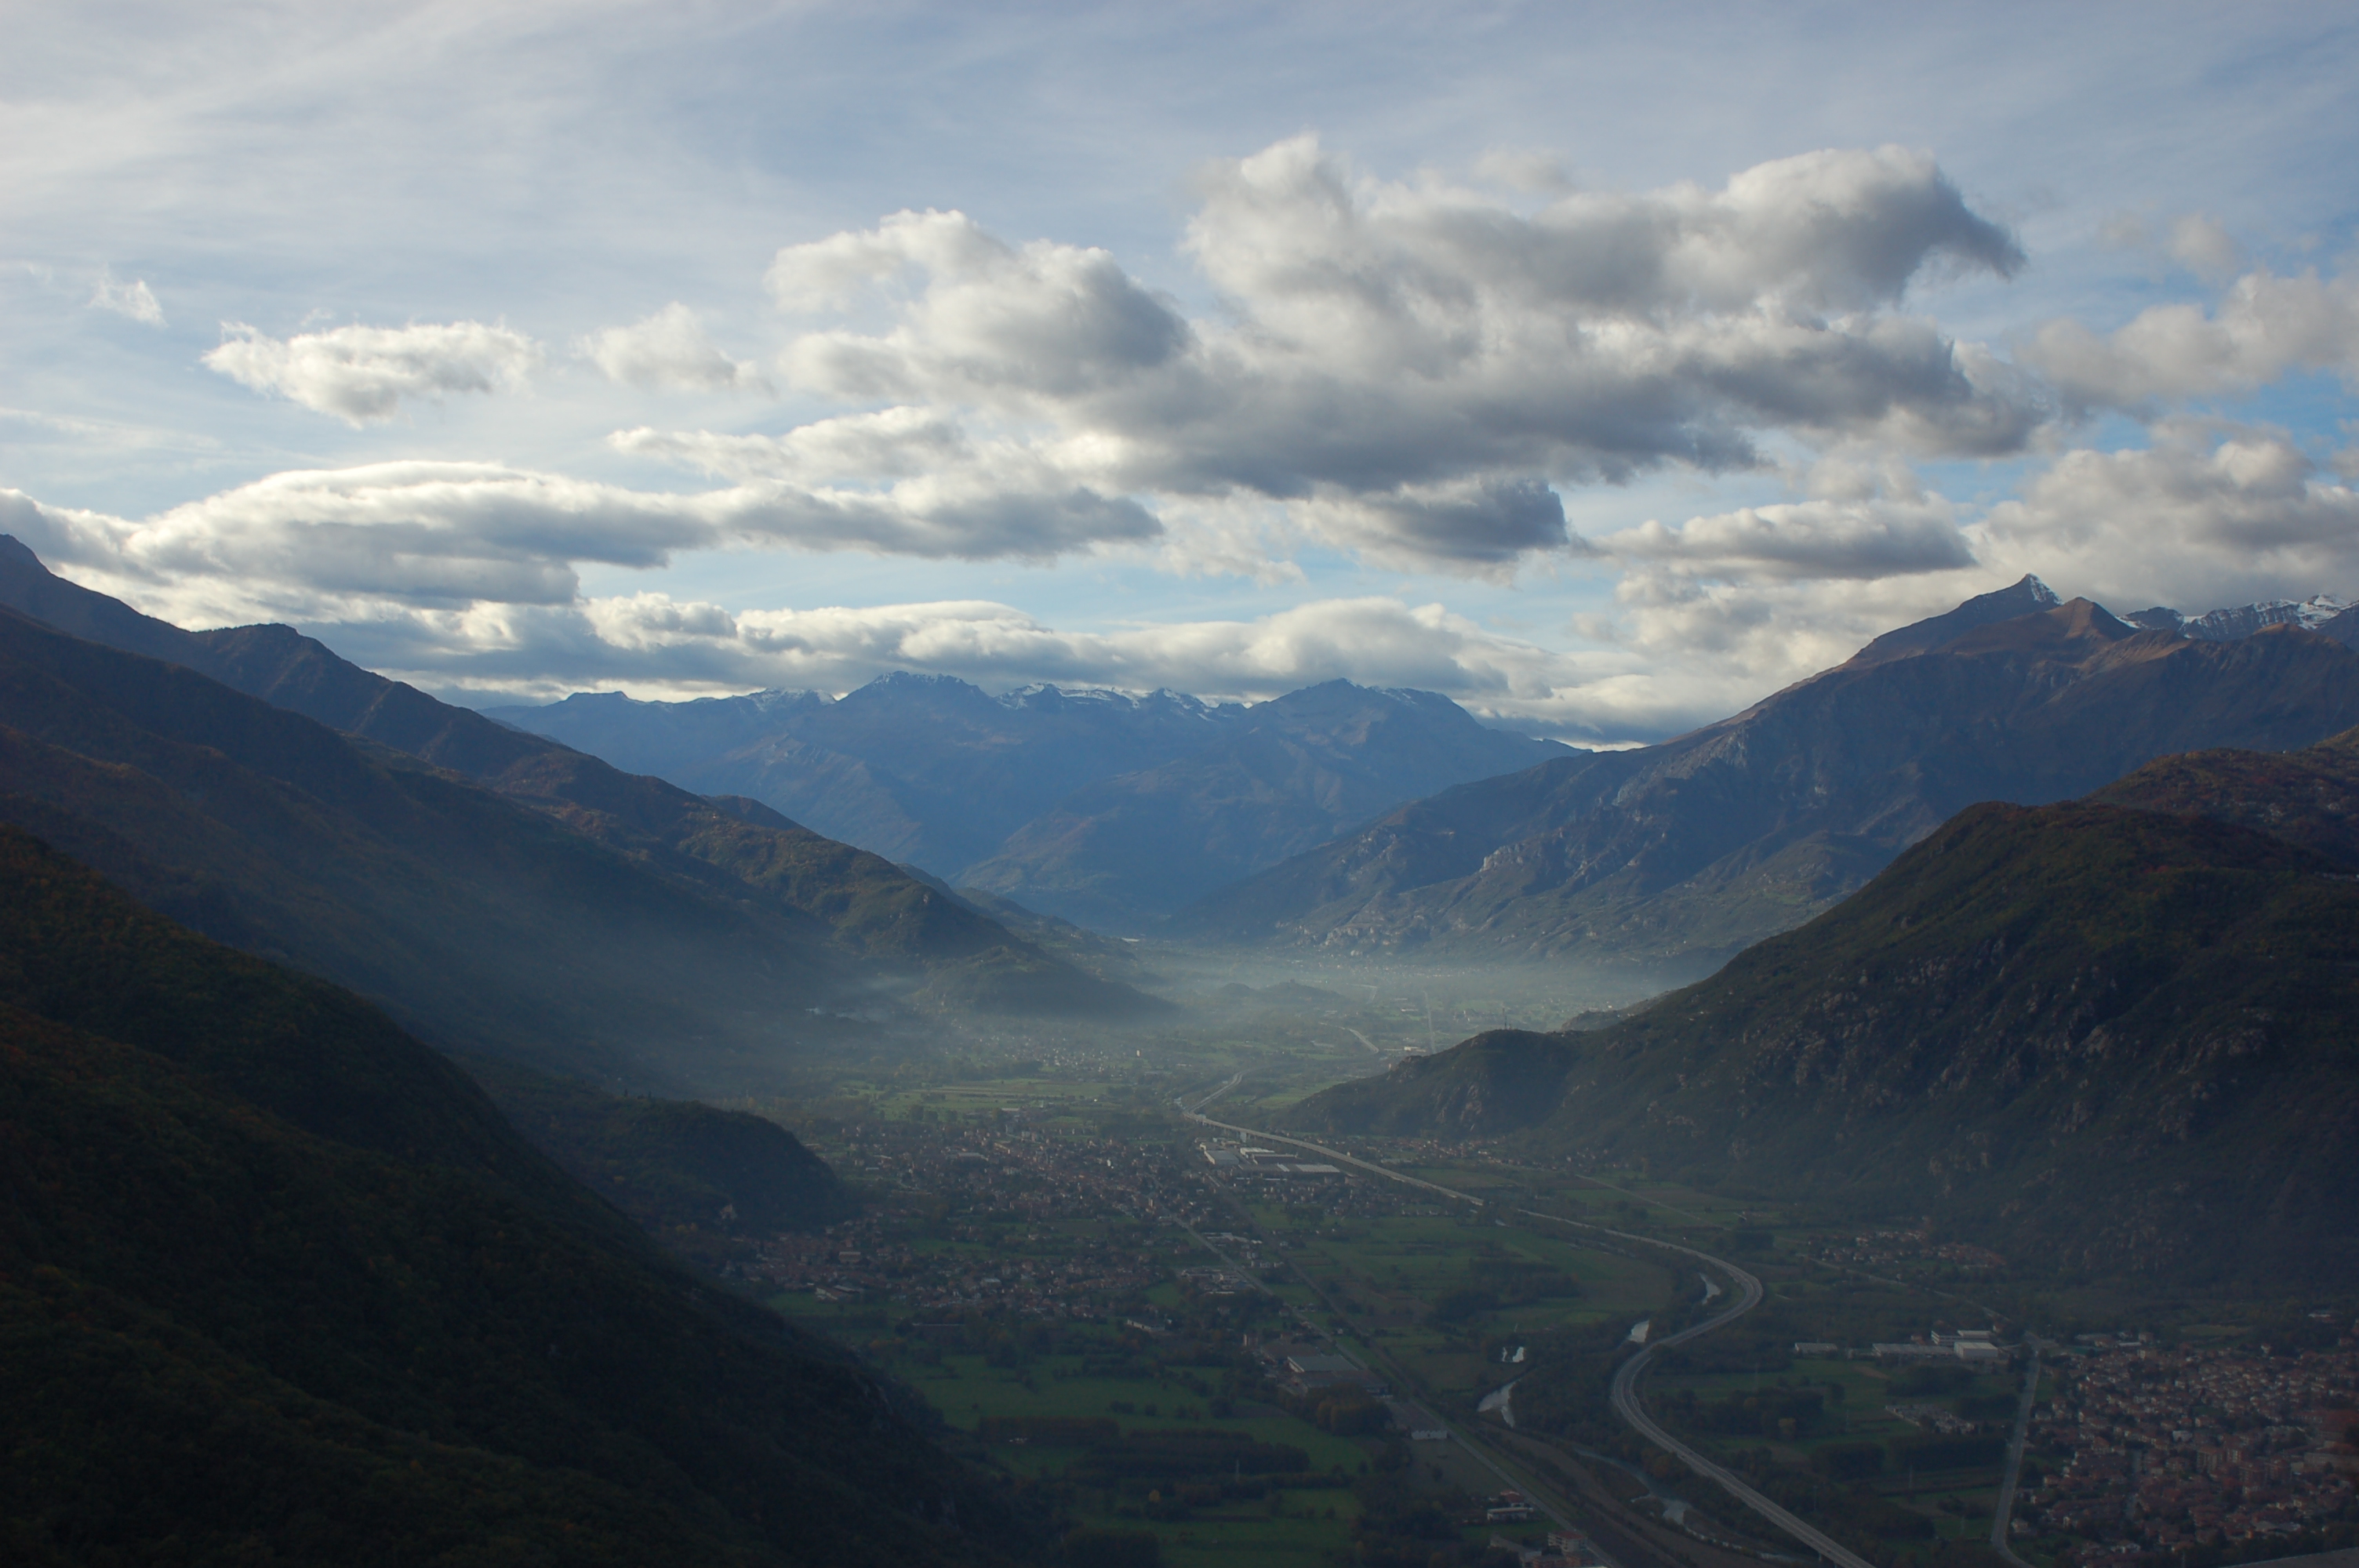 Mototurismo in montagna, in Piemonte si può